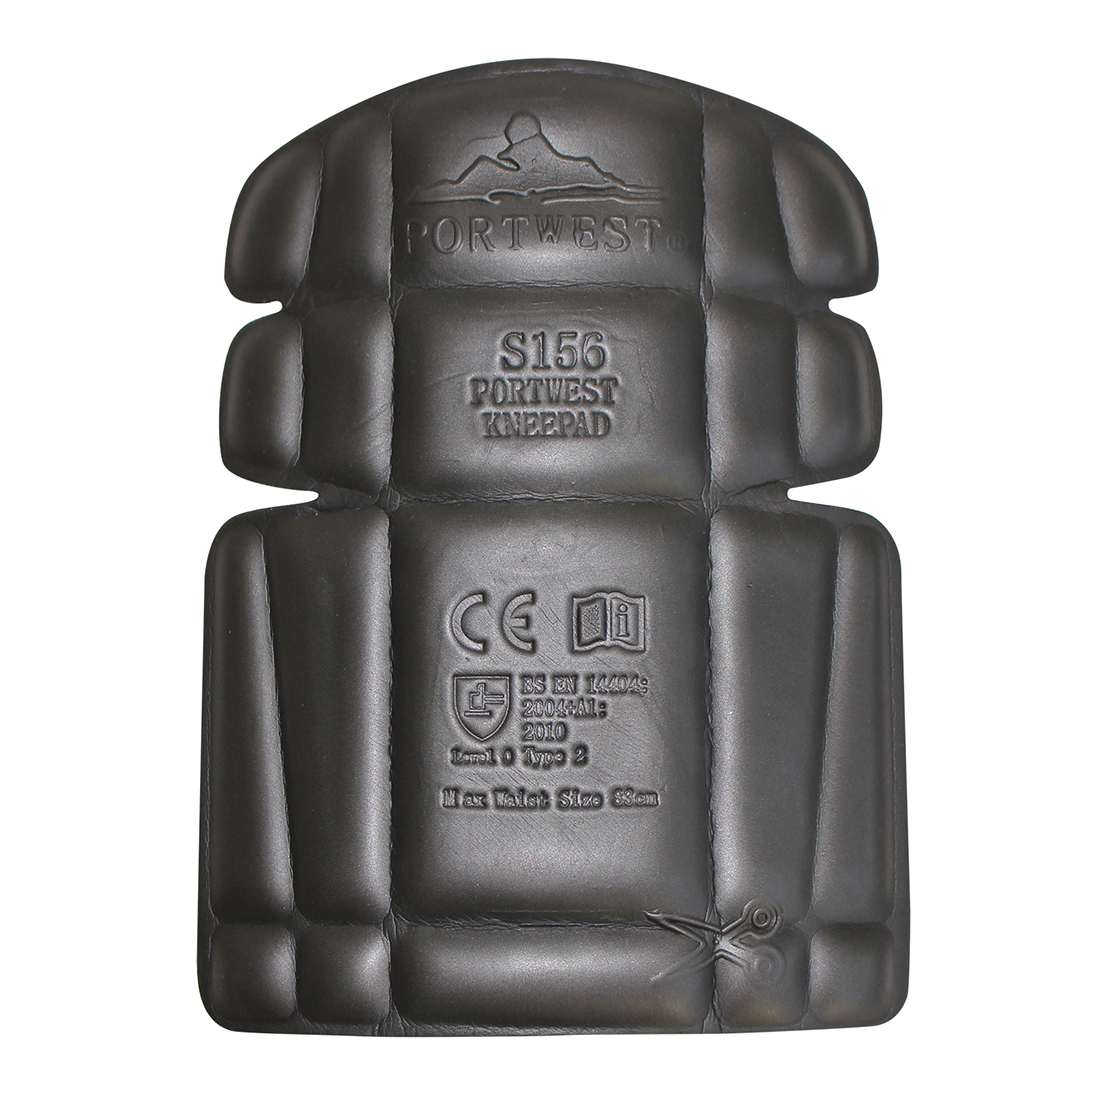 S156 Portwest® High Density EVA Knee Pad Inserts